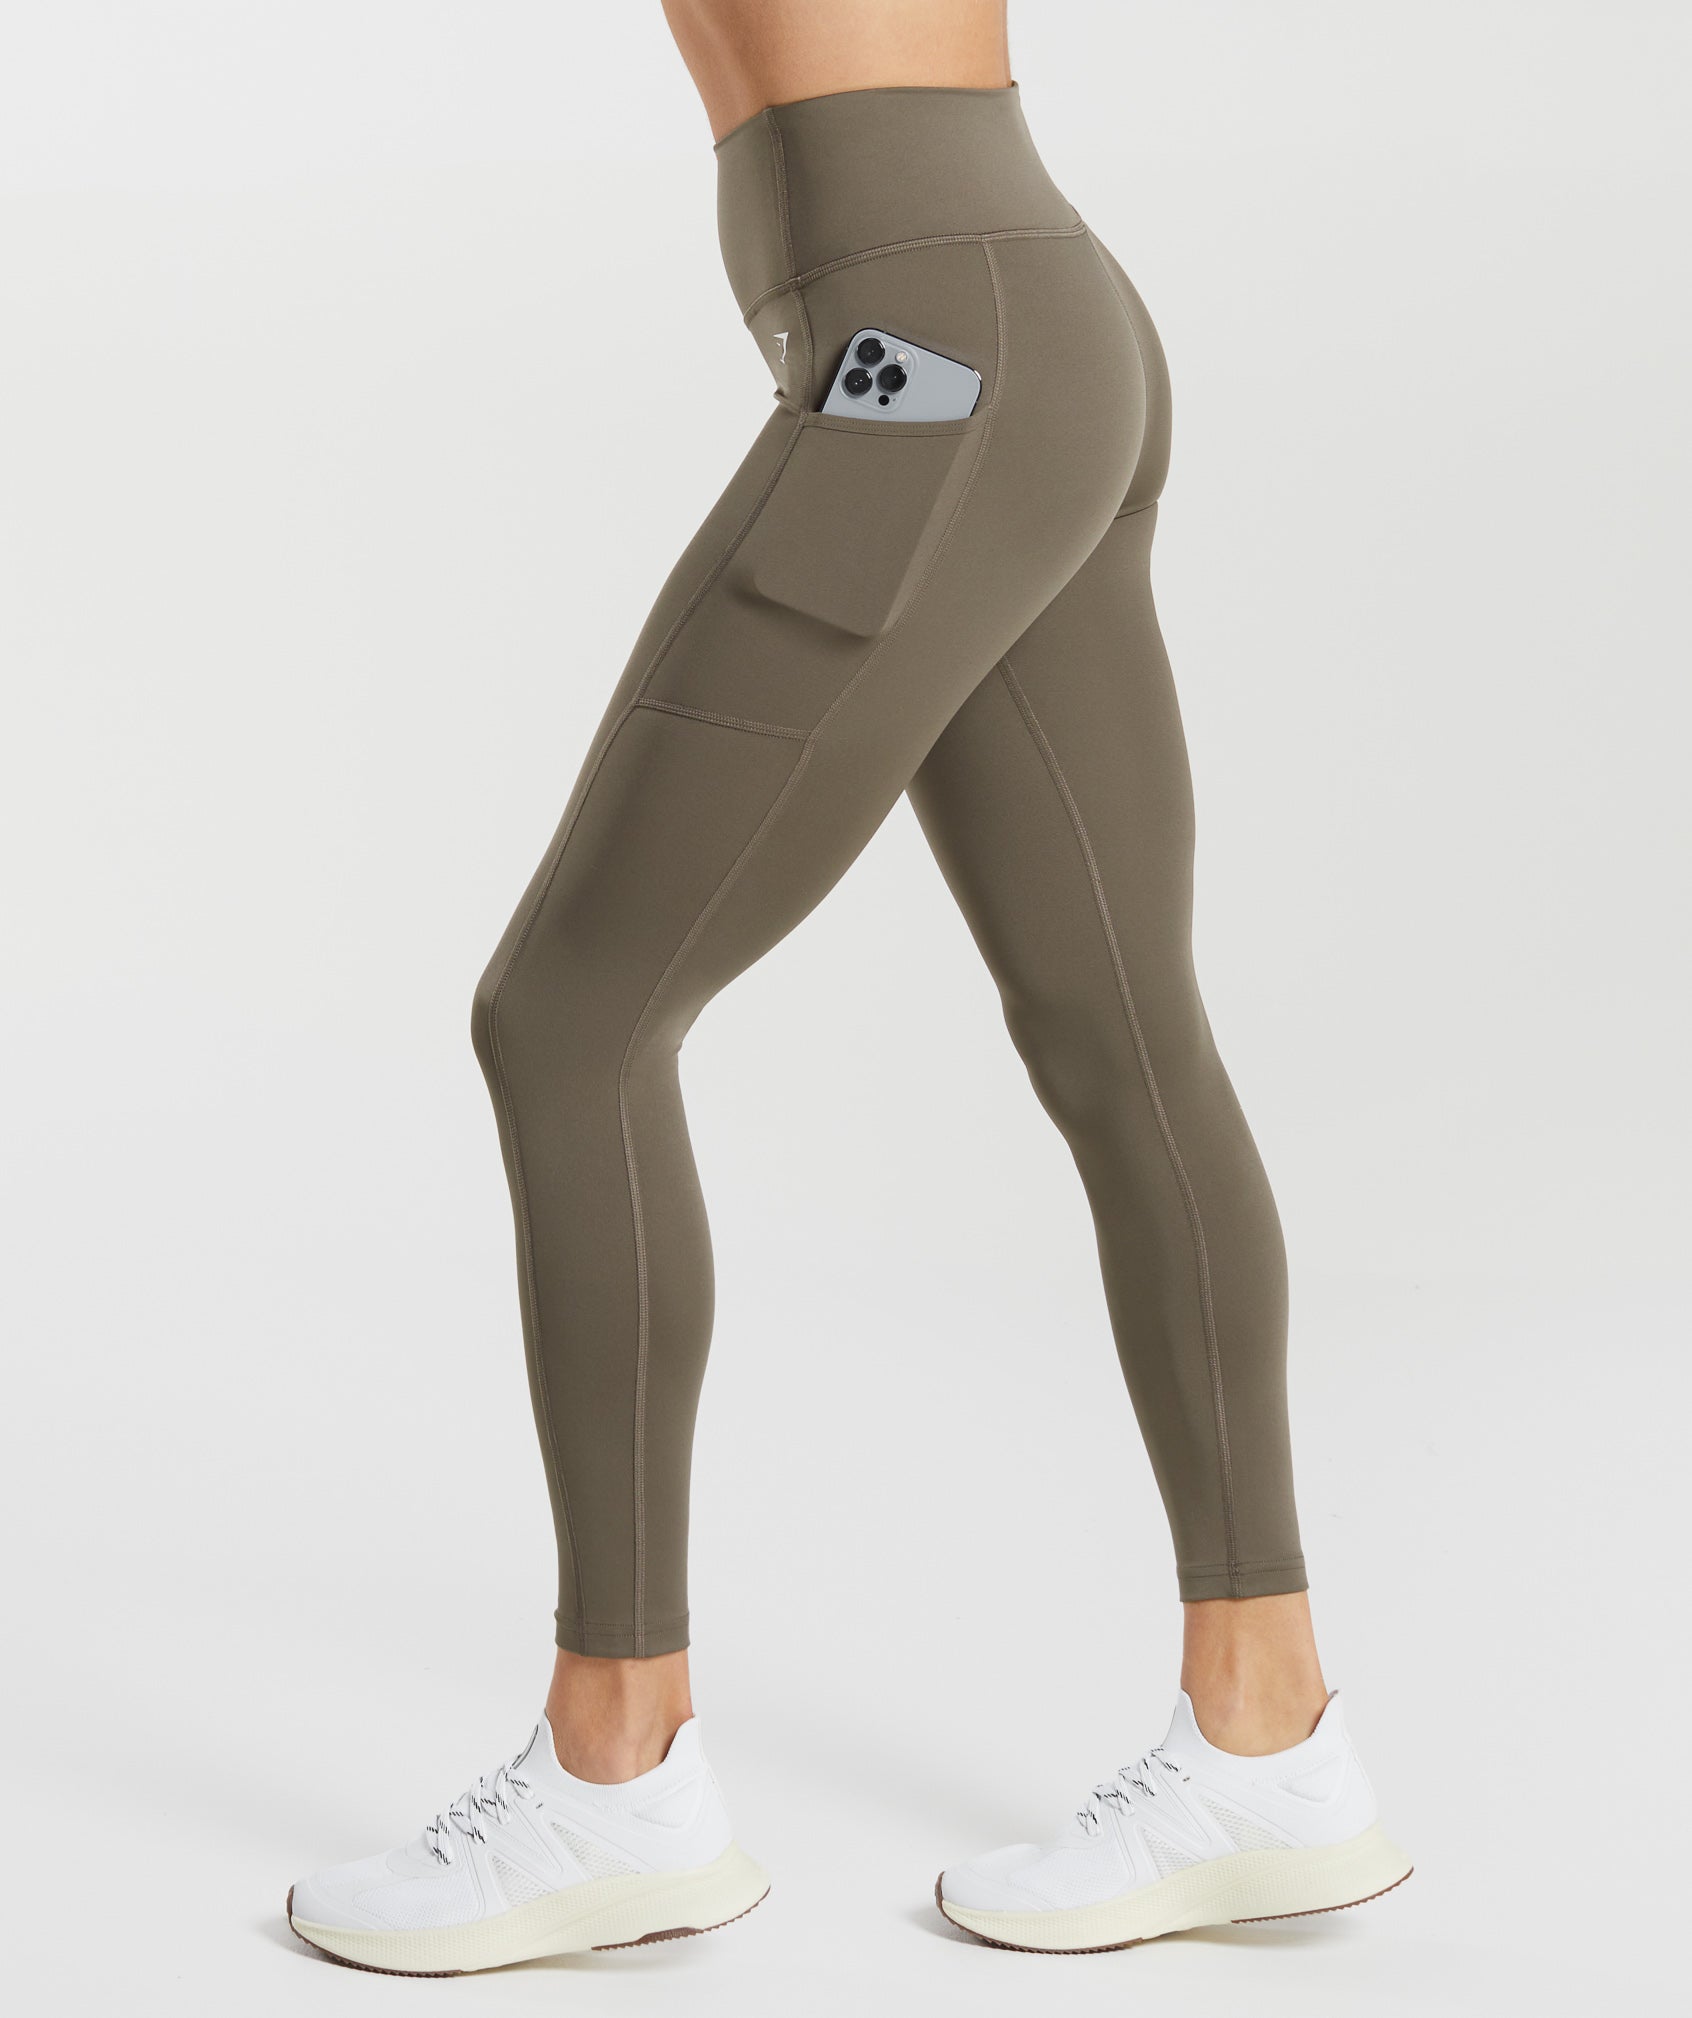 Buy Dermawear Women's Activewear Workout Leggings With Pocket - Brown online